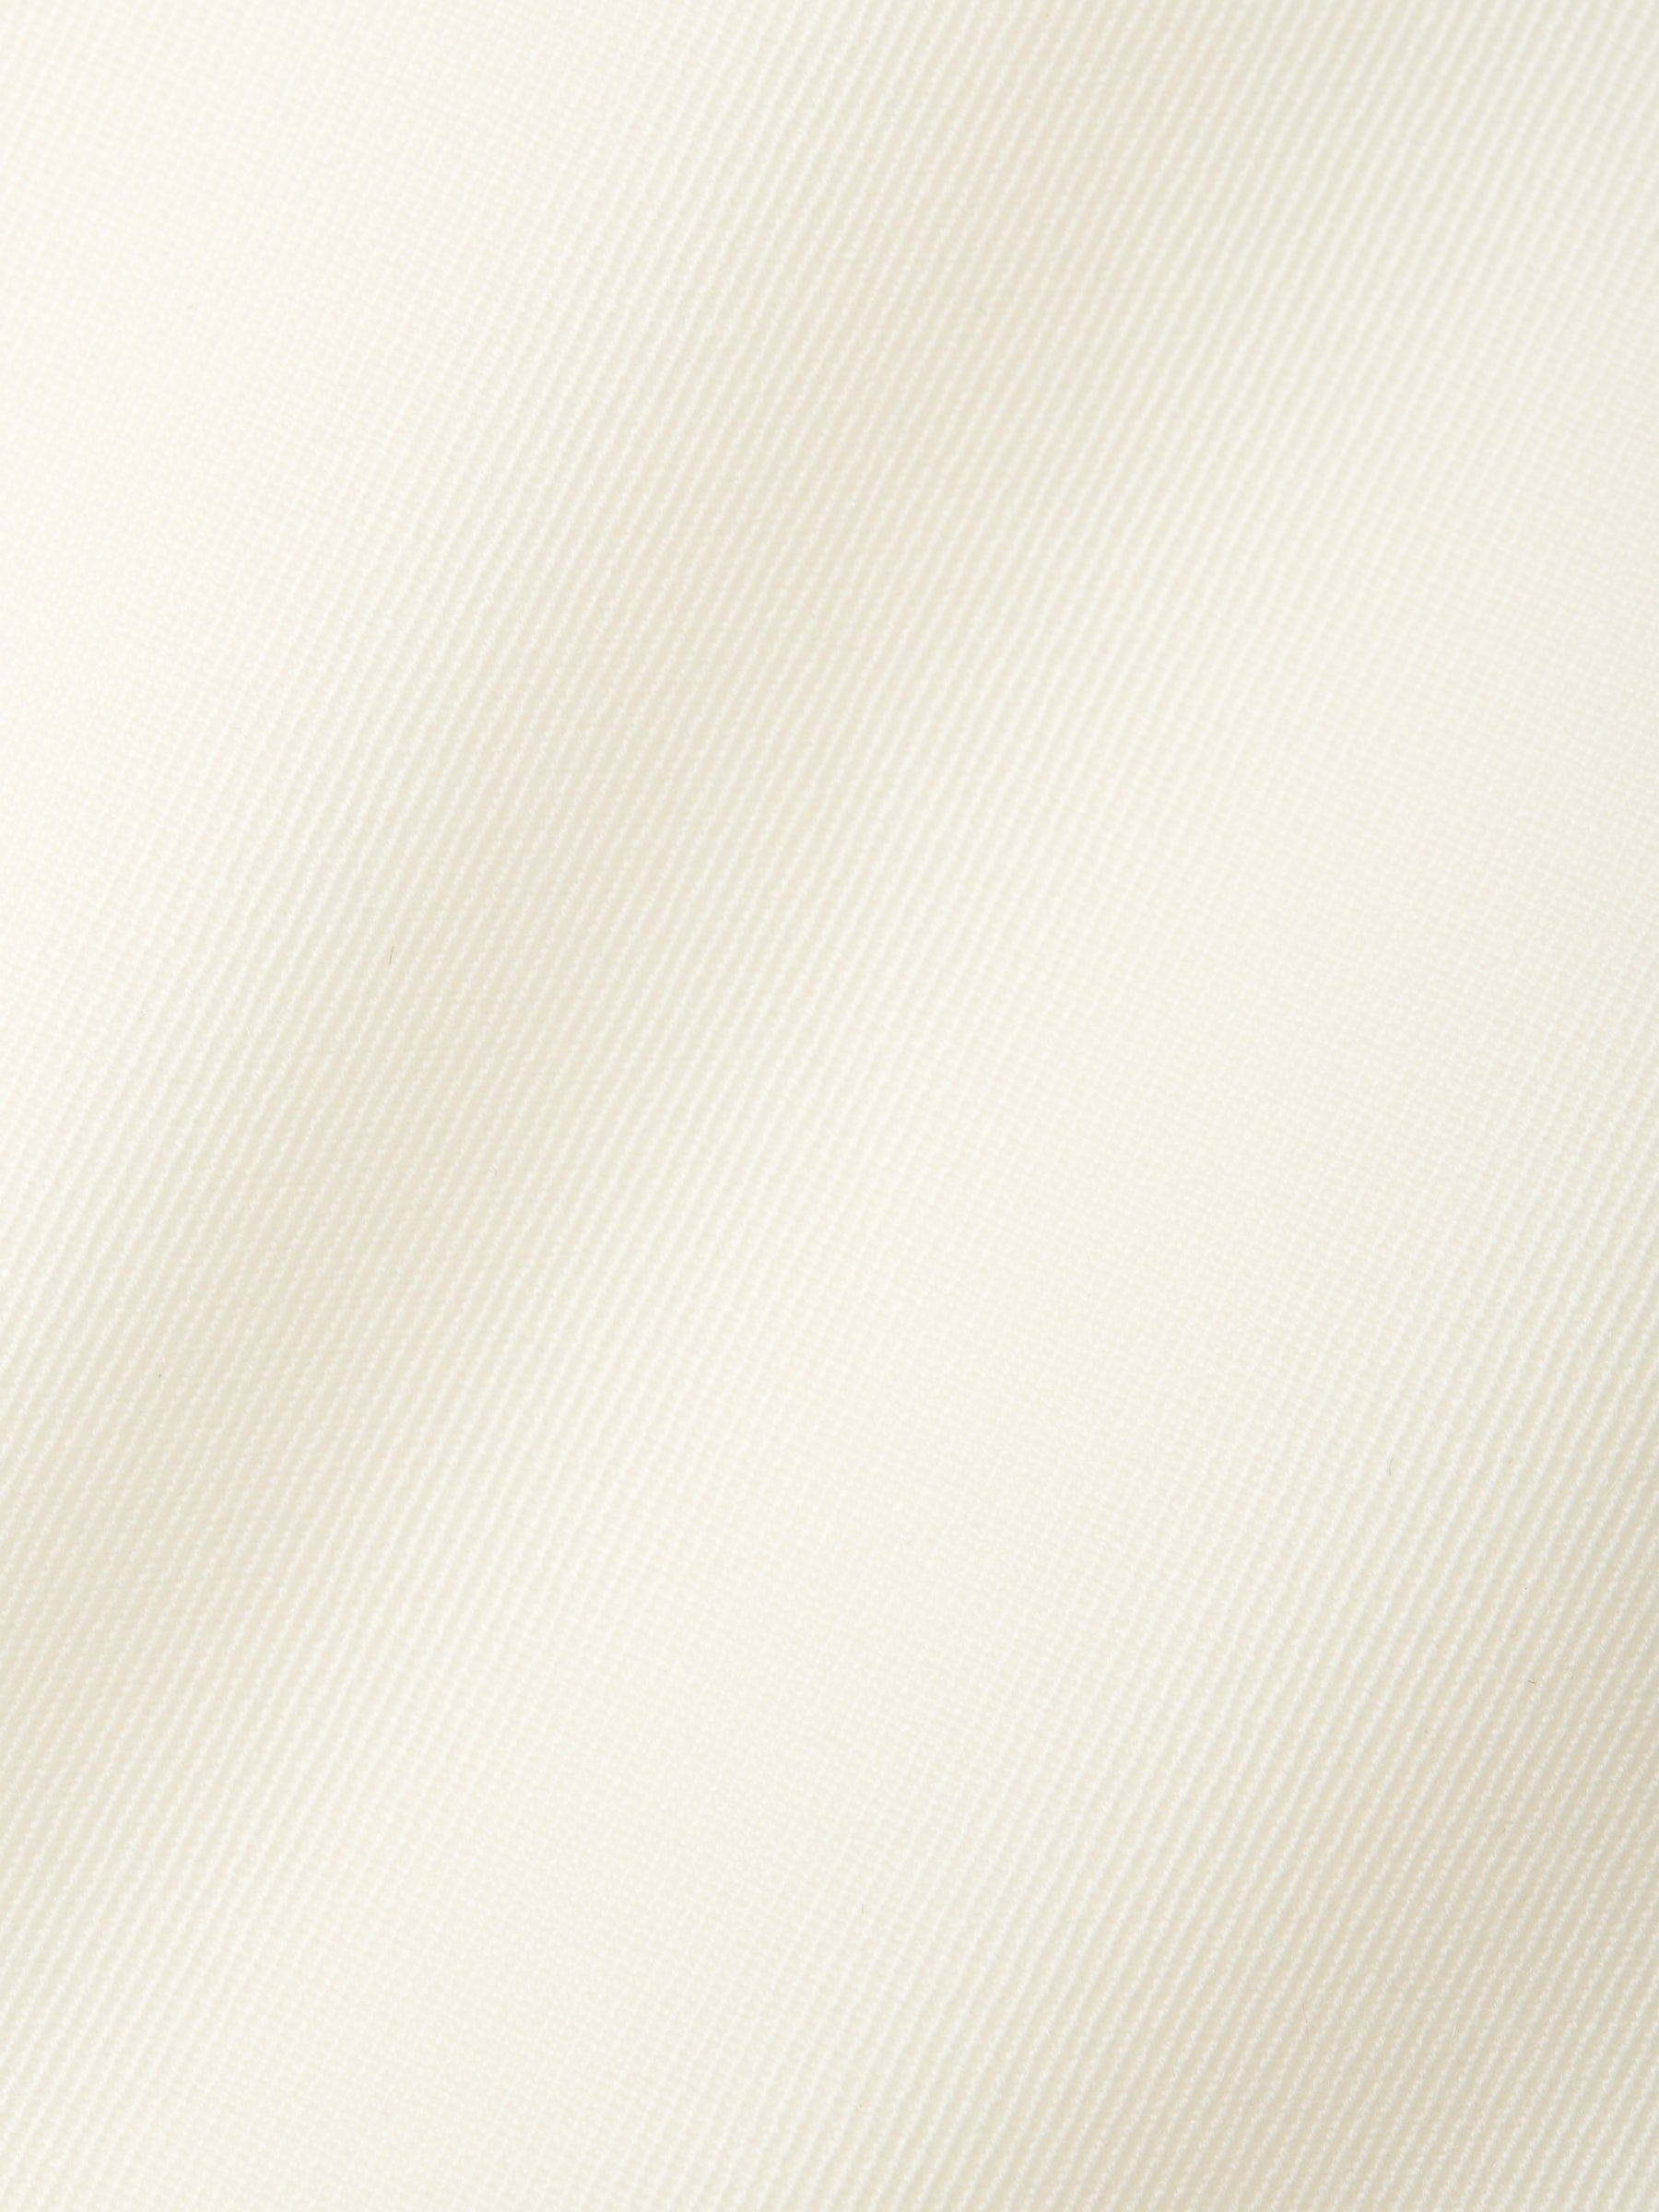 Cream Gabardine Wool Single Breasted 6 Button Waistcoat